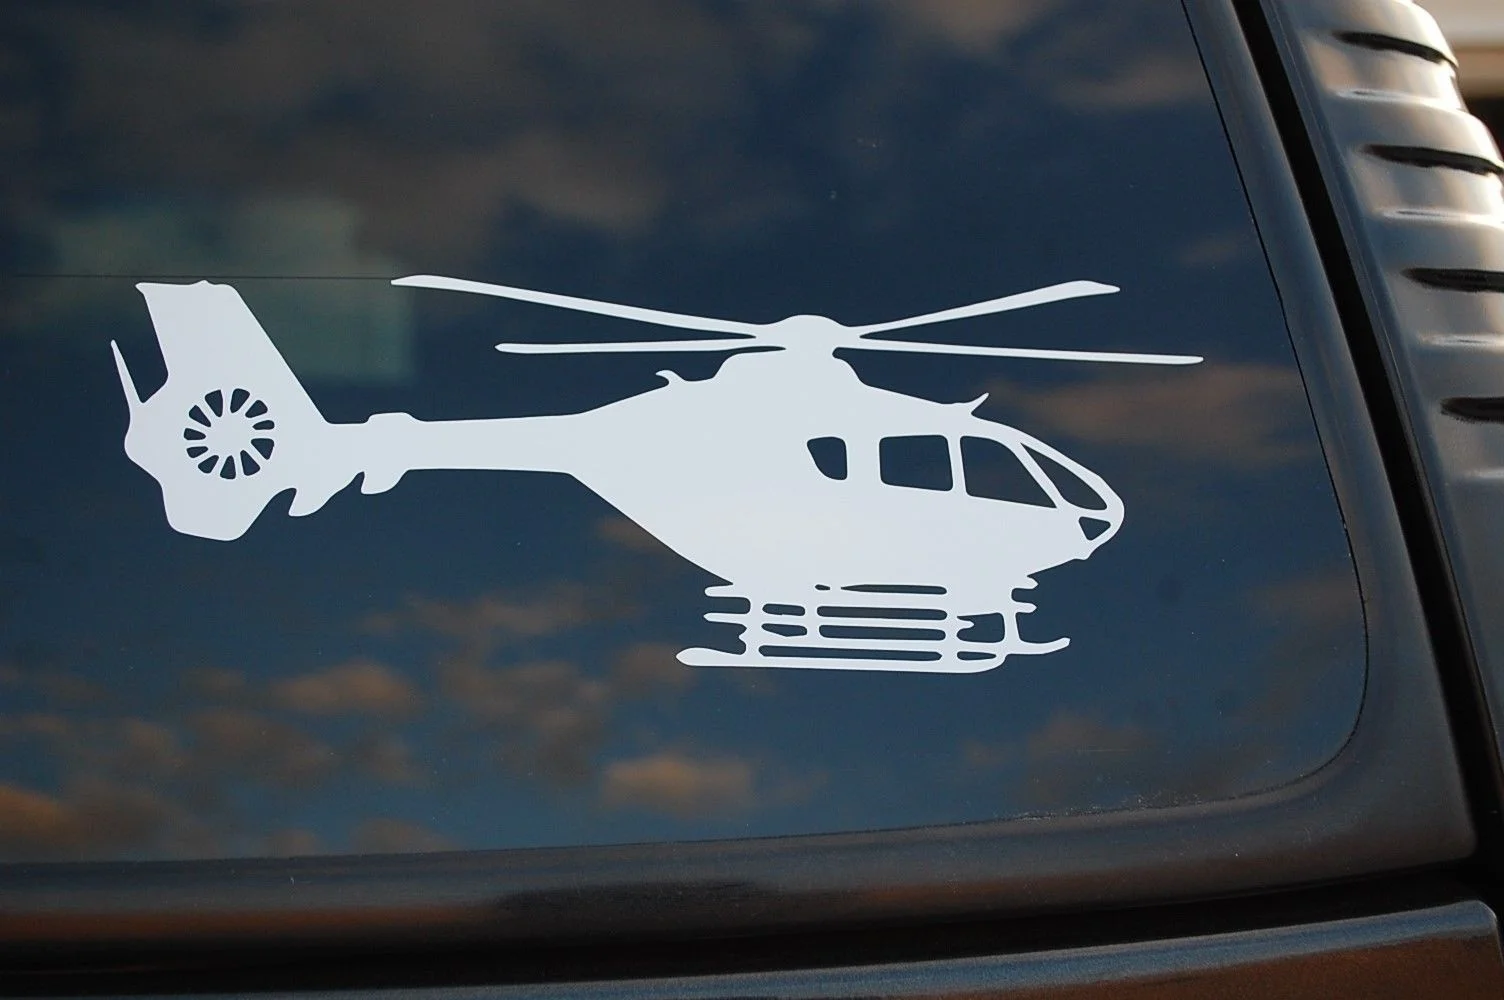 EC 135 Helicopter Stickers Vinyl Decal Eurocopter Window Car Laptop sticker 15cm | Игрушки и хобби